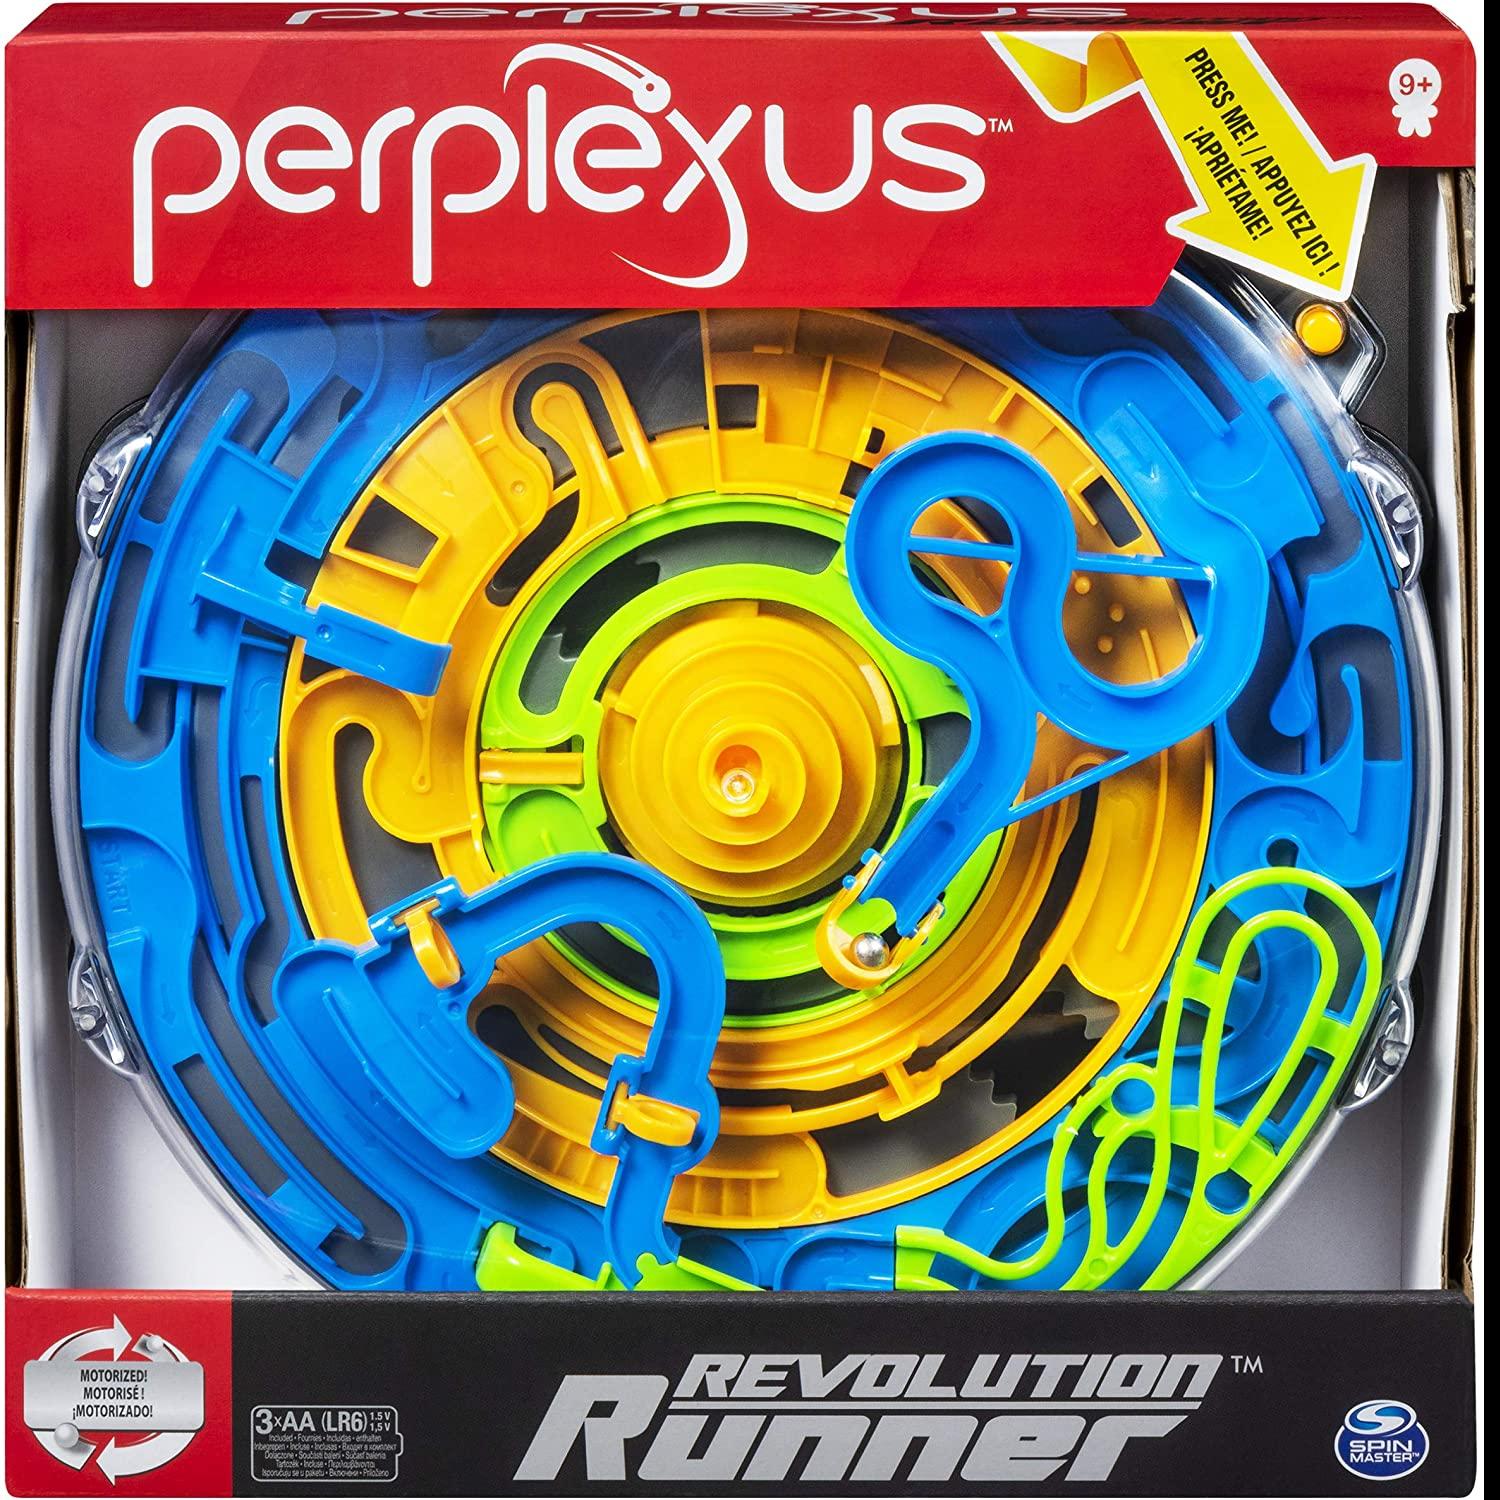 Perplexus Revolution Runner Motorized Perpetual Motion 3D Maze Game for $10.97